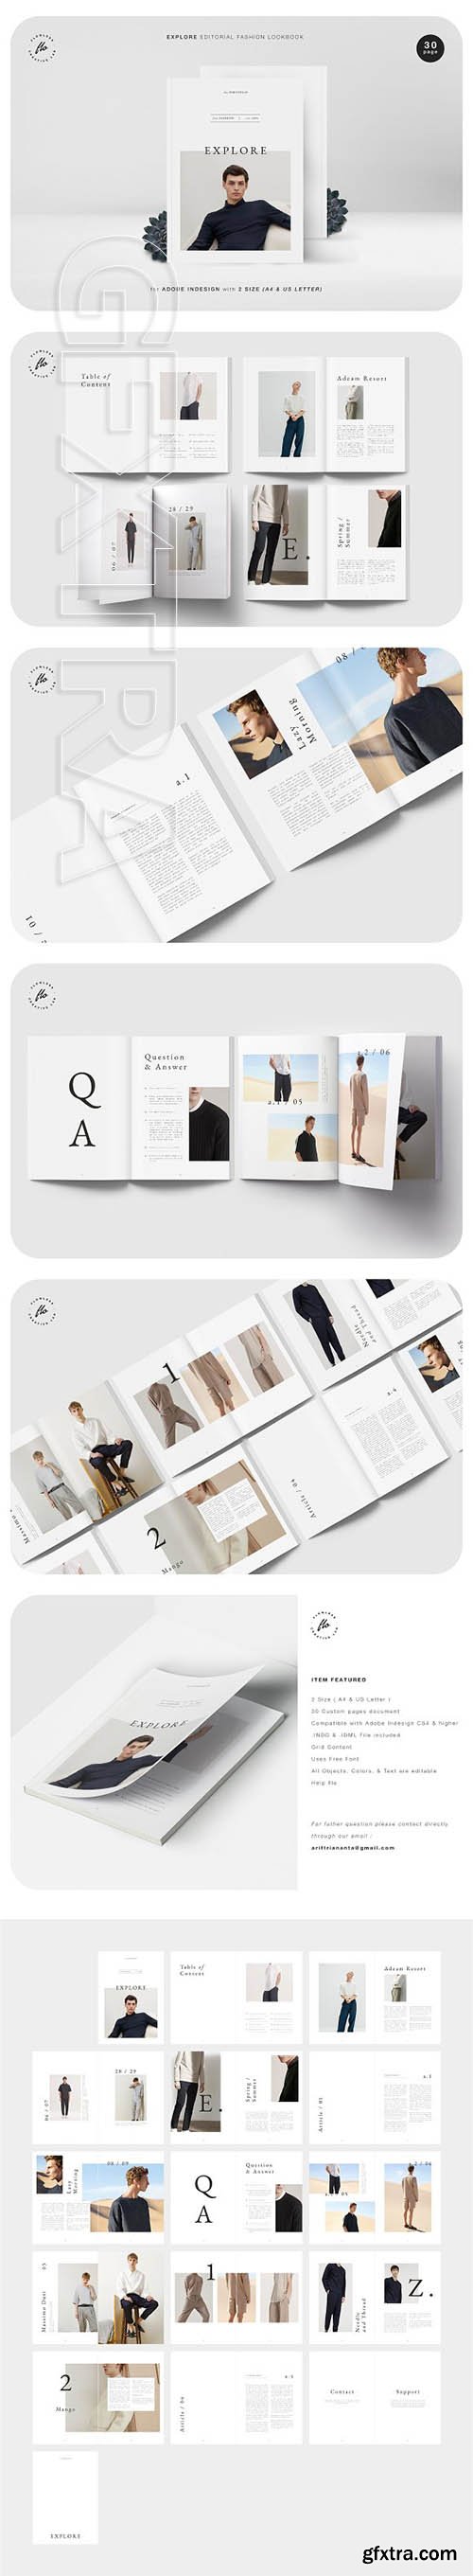 CreativeMarket - EXPLORE Editorial Fashion Lookbook 3479585